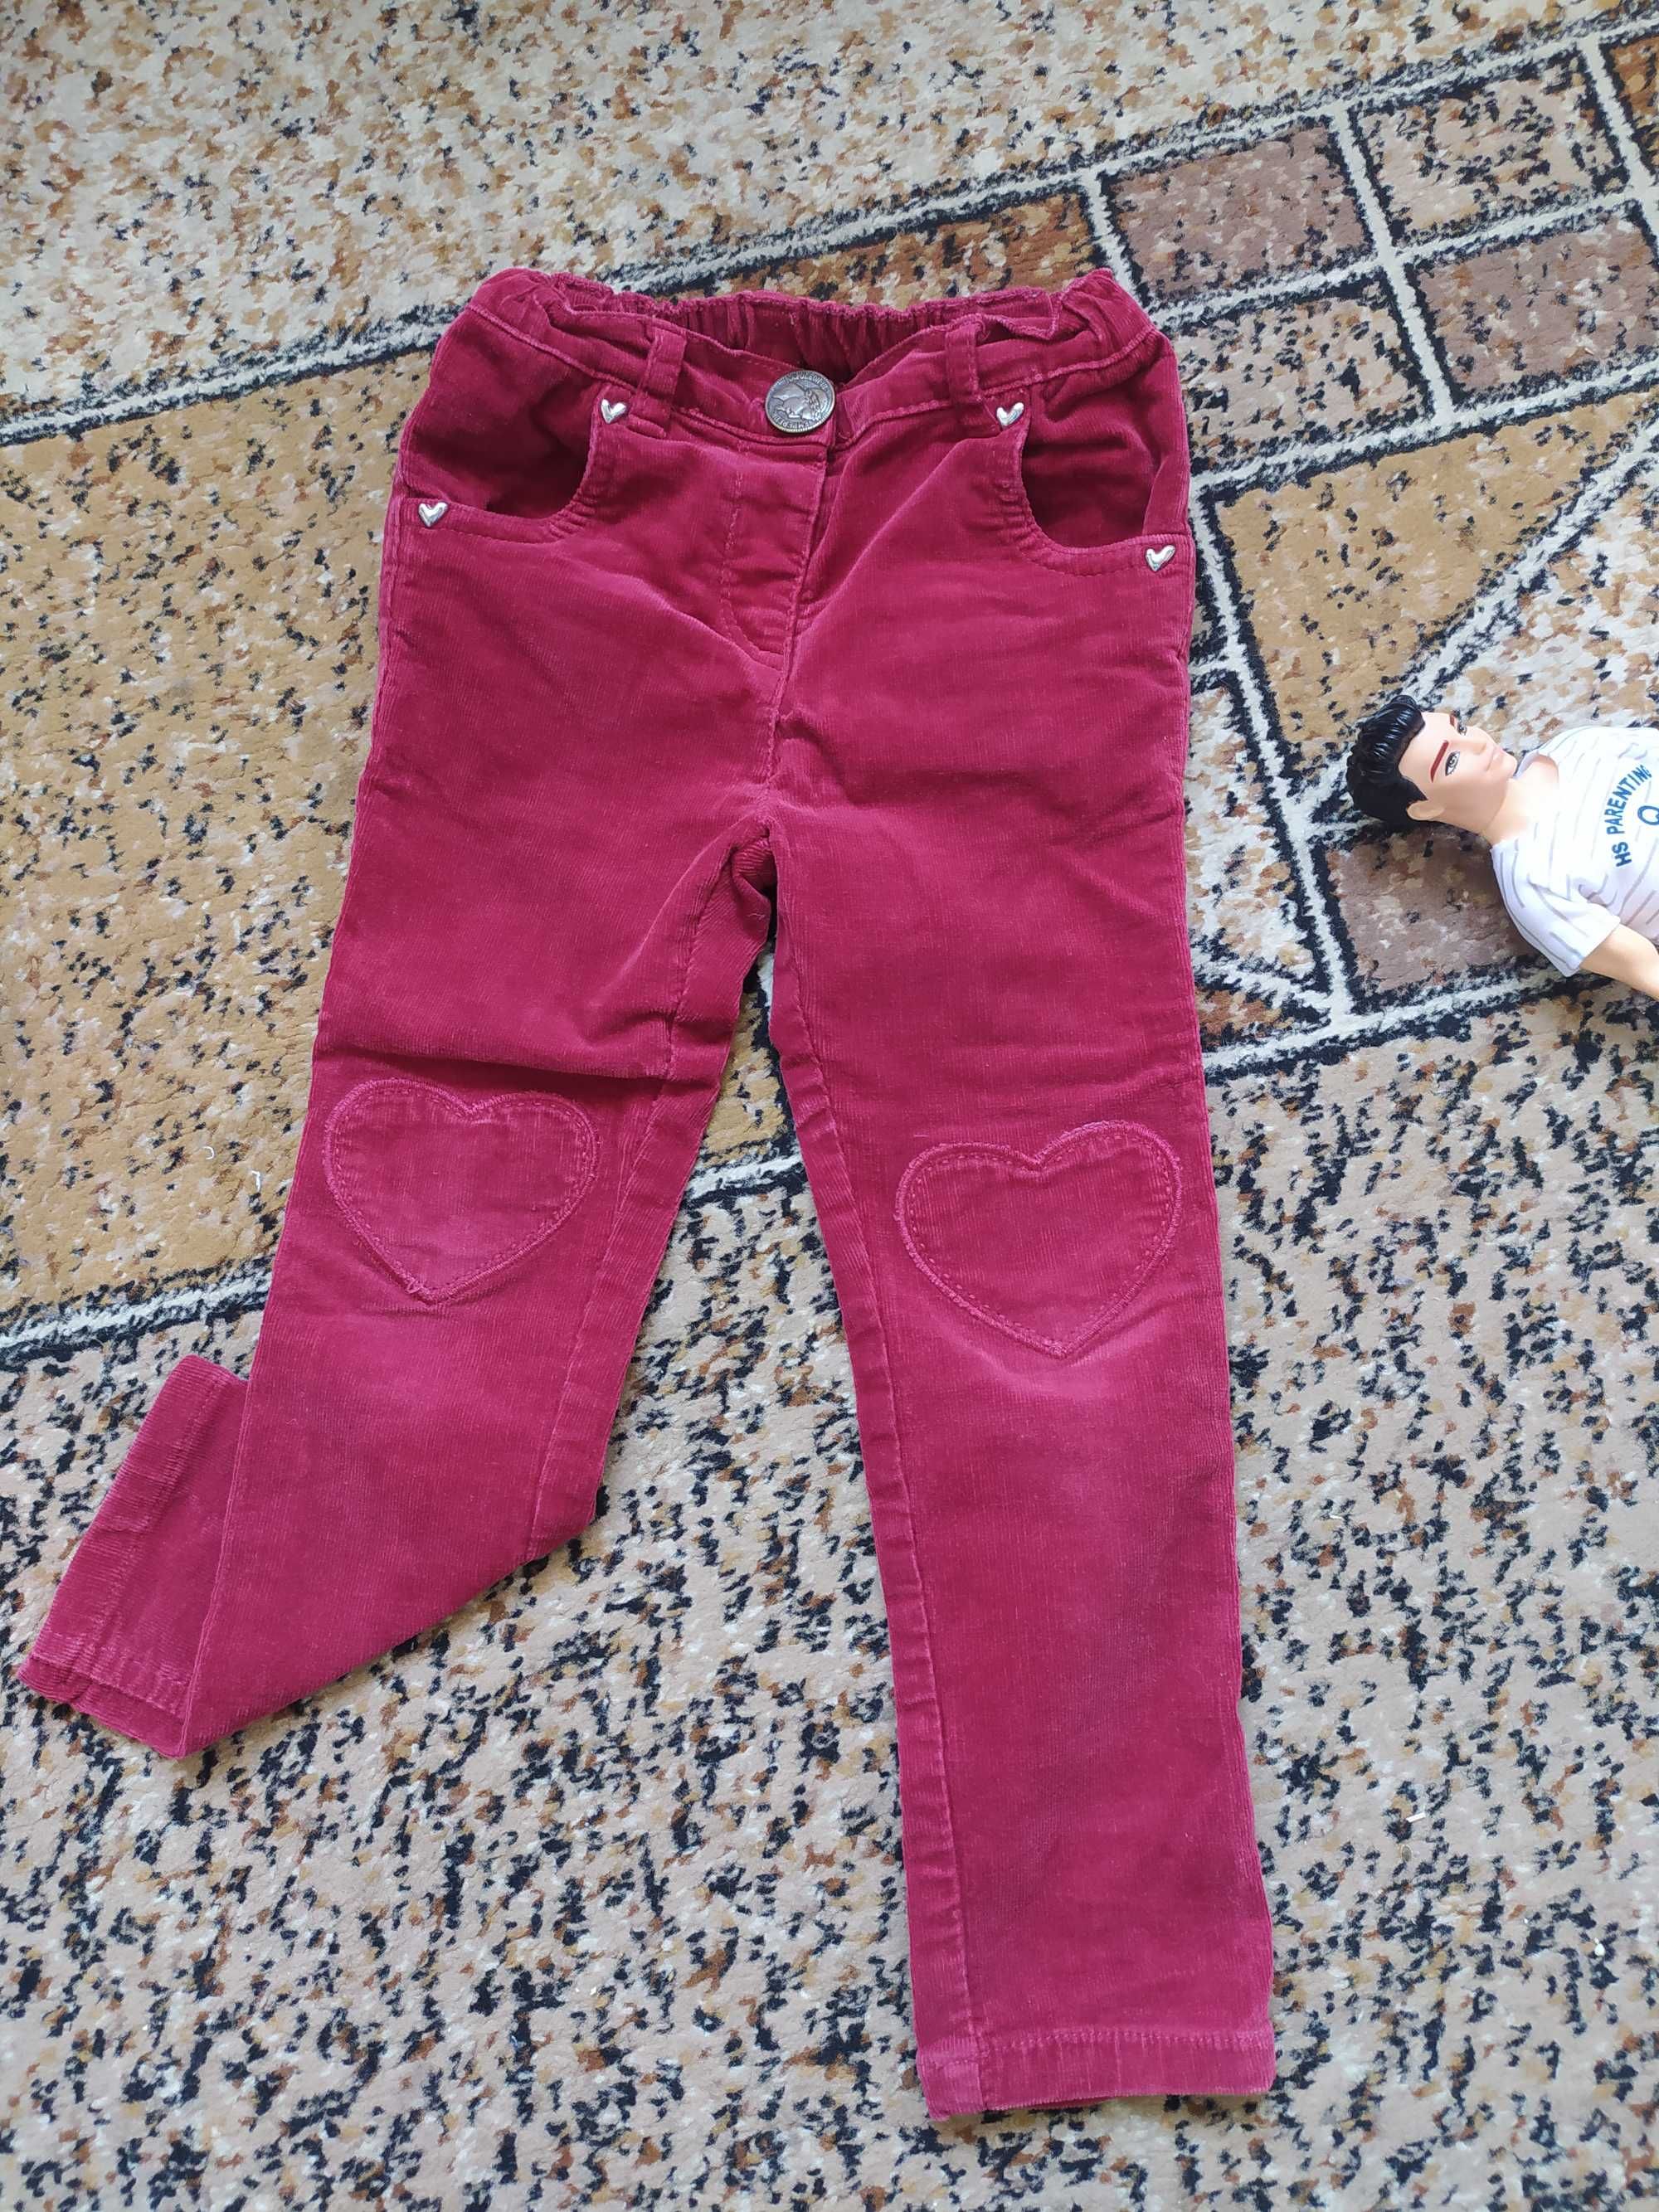 Вельветовые штаны (вельветові штани) TU 104 (3-4 роки) для дівчинки